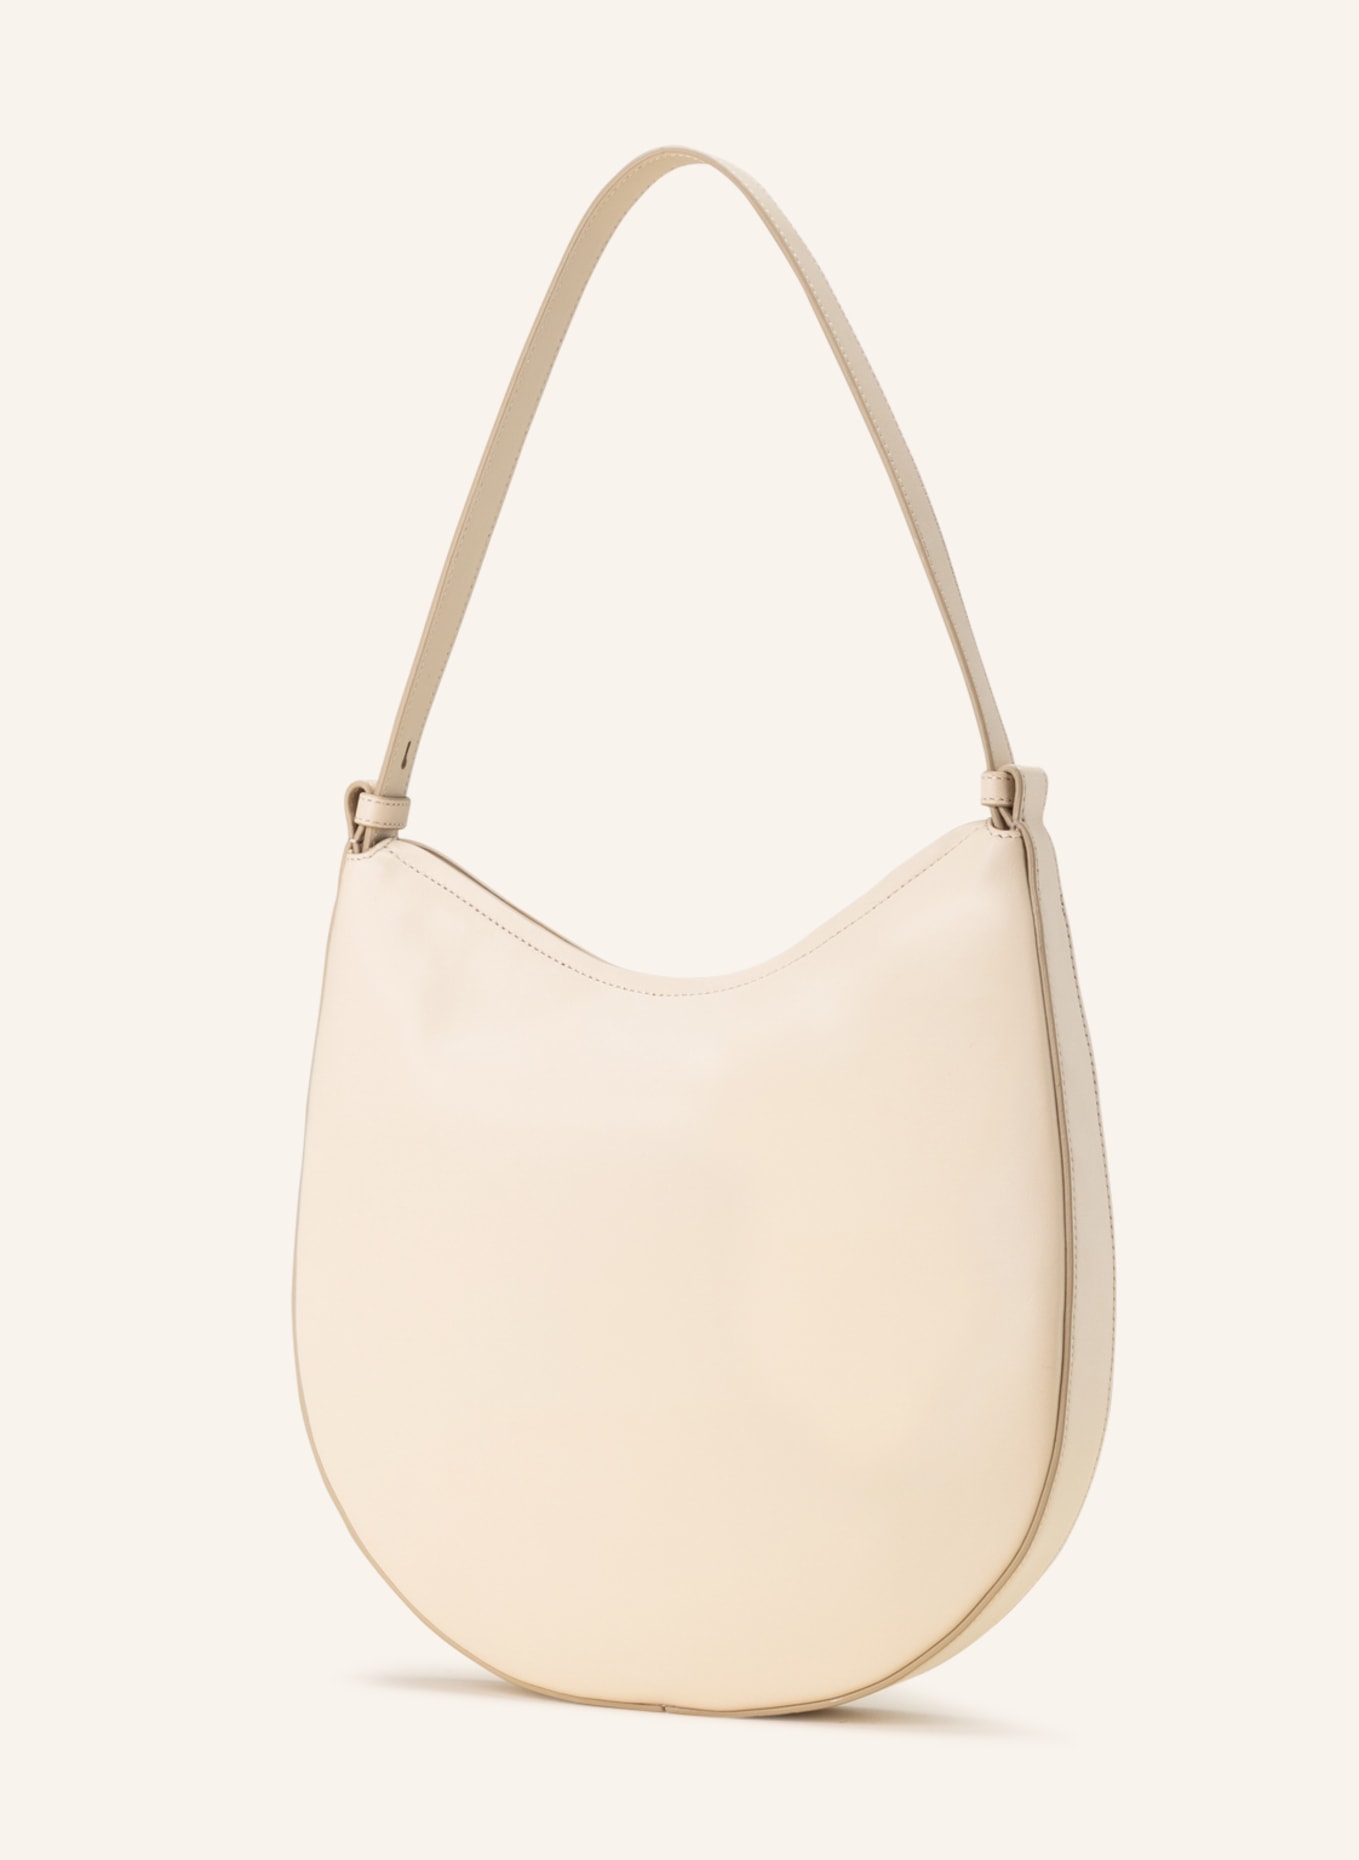 AESTHER EKME DEMI LUNE - Handbag - off white/off-white 